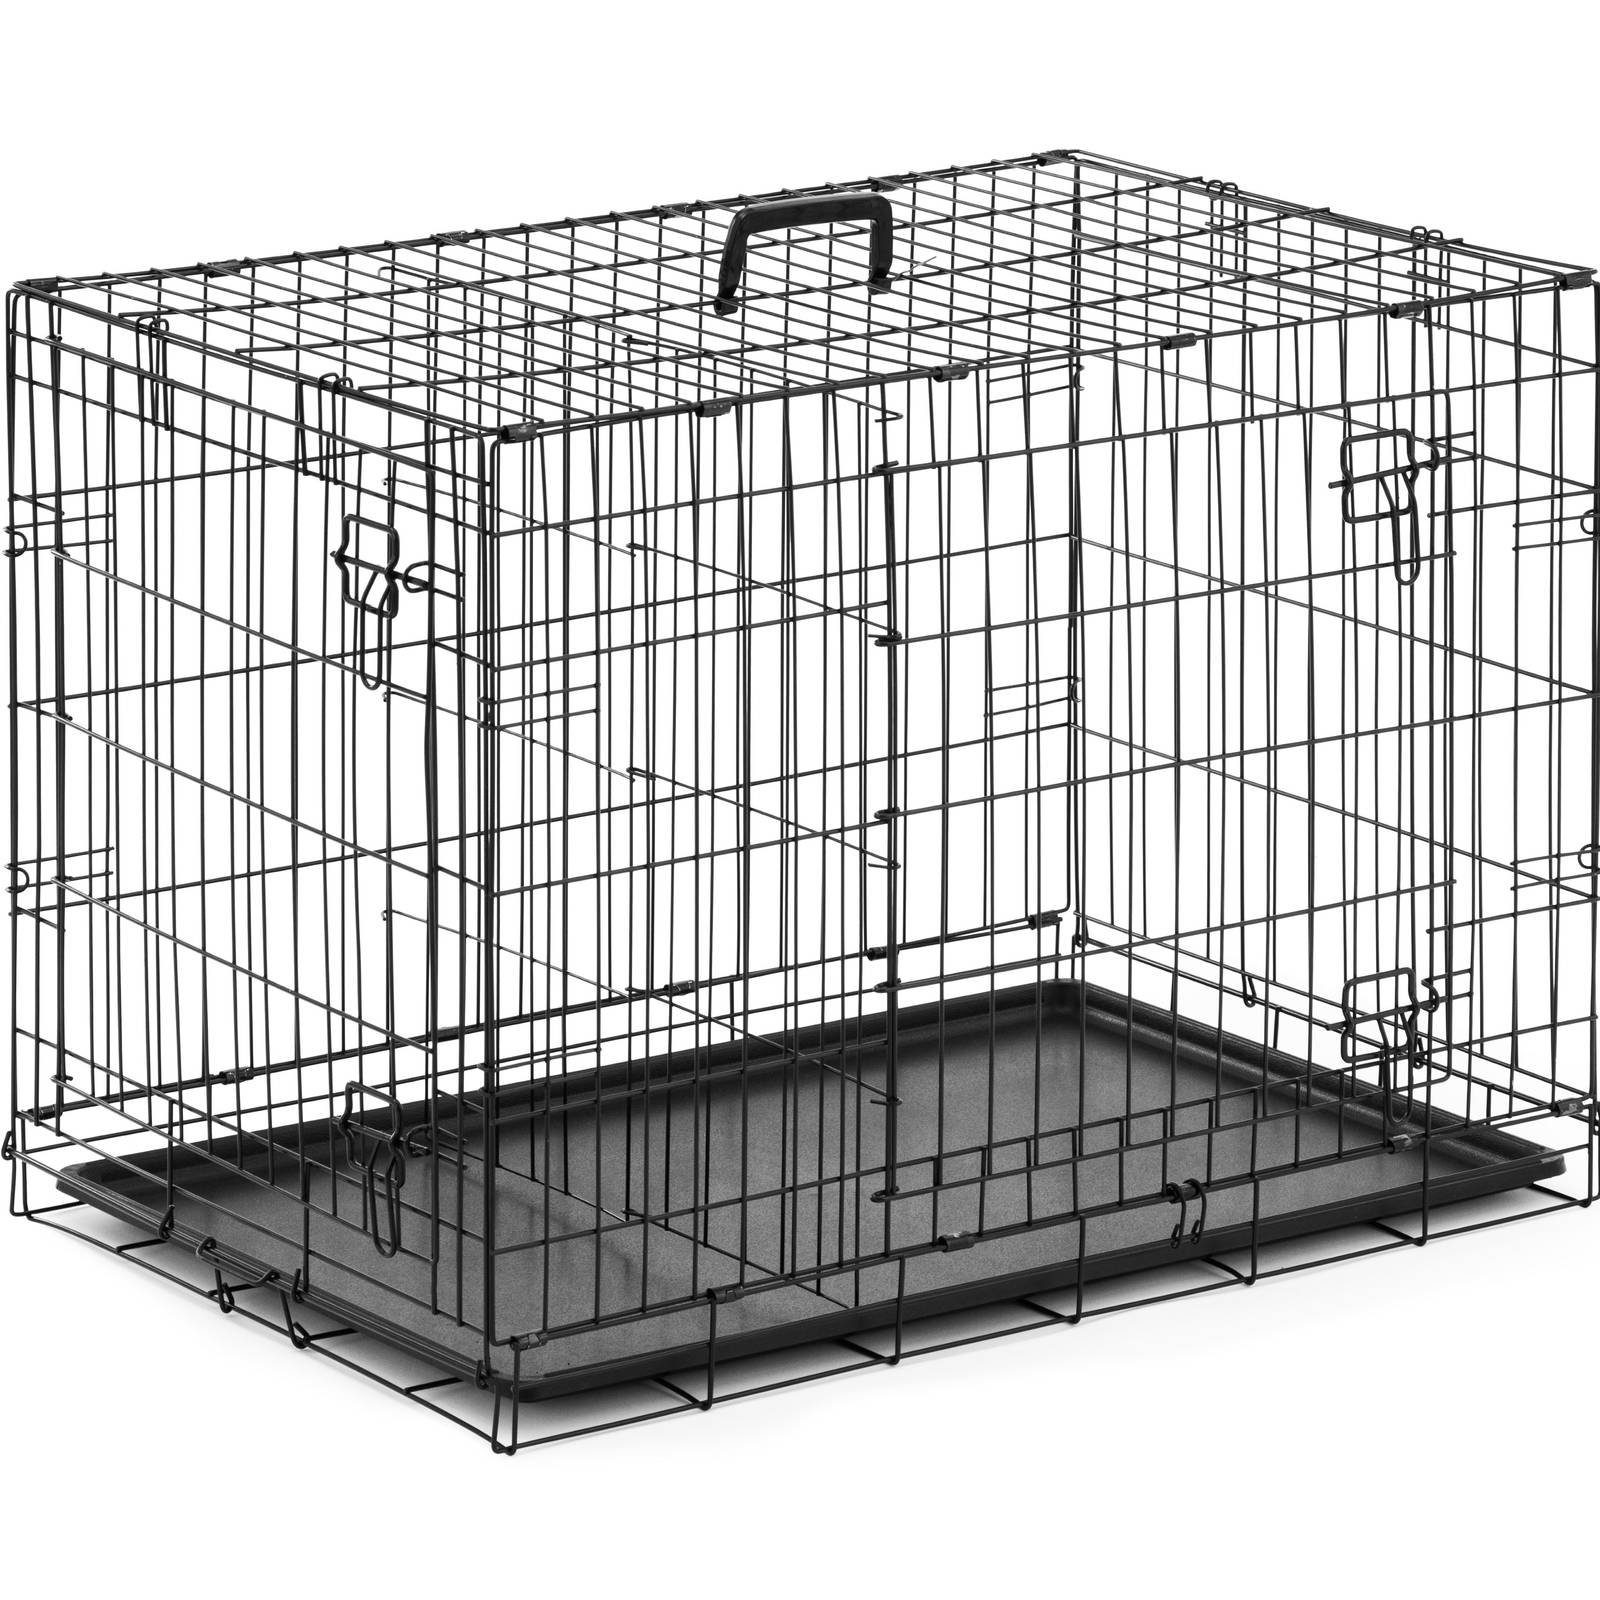 Wiesenfield Hundezwinger Hundebox Hundetransportbox Hundekäfig Gitterbox 92 x 60 x 66 cm Eisen